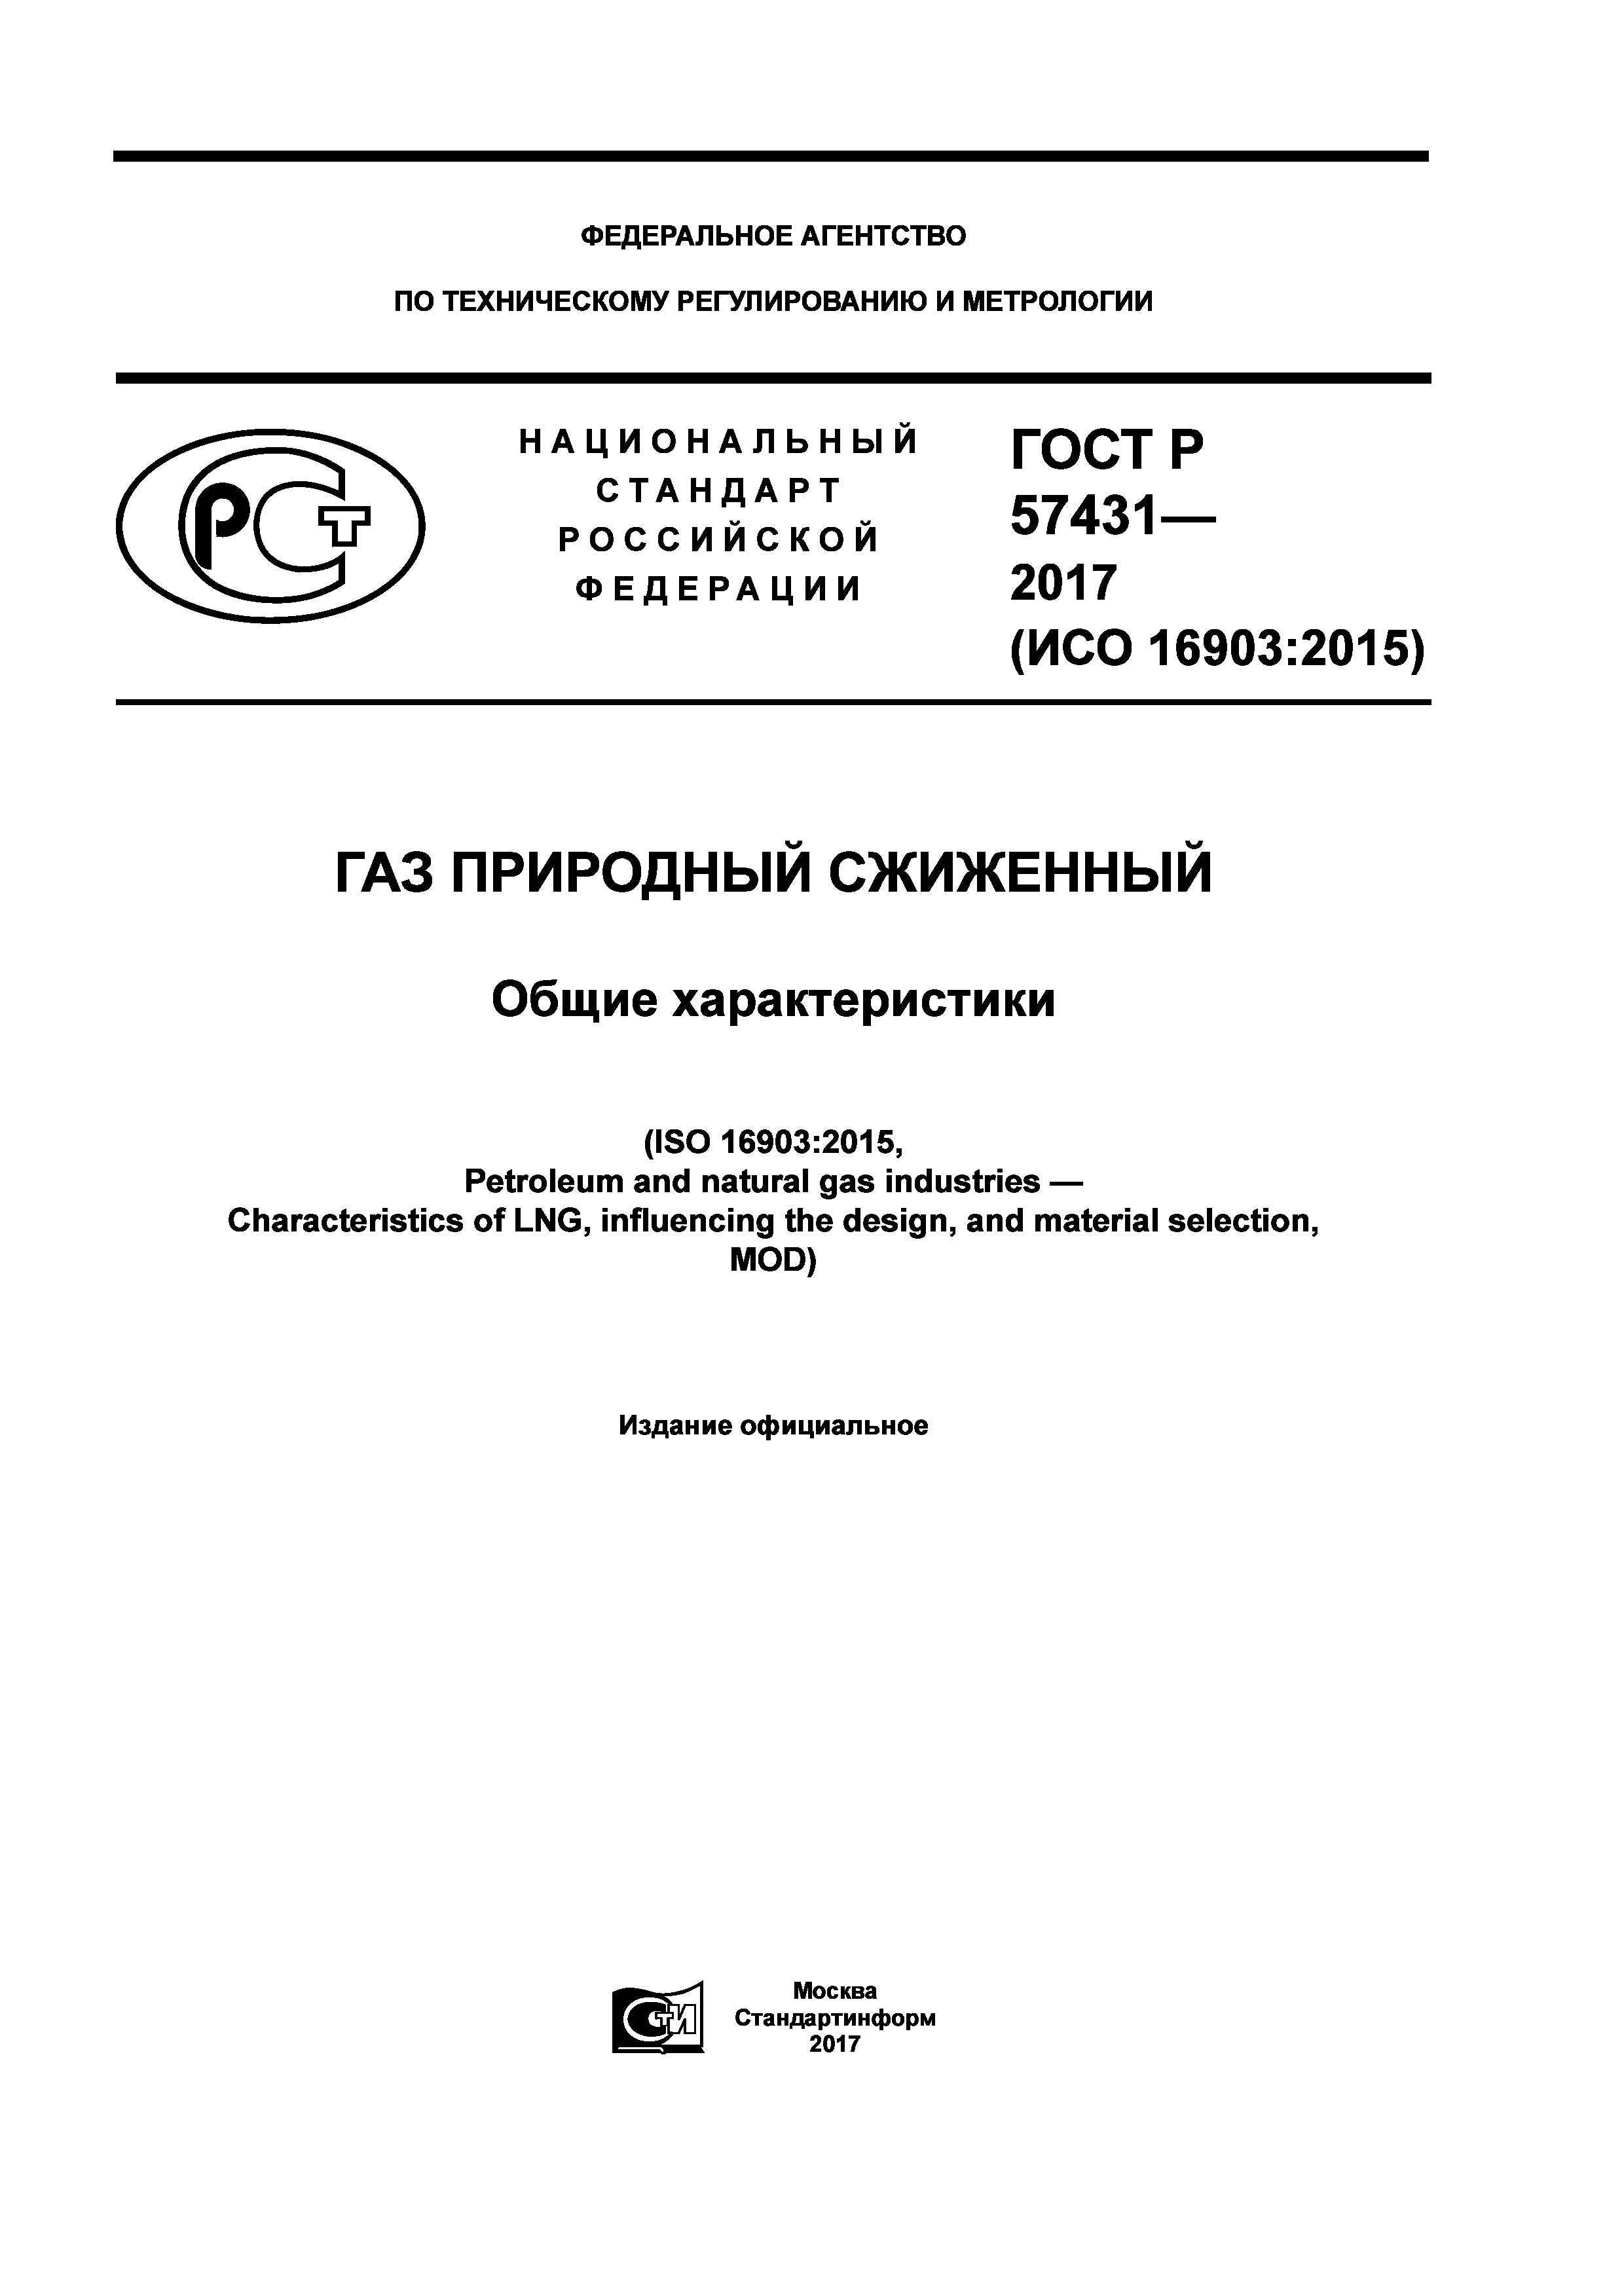 ГОСТ Р 57431-2017